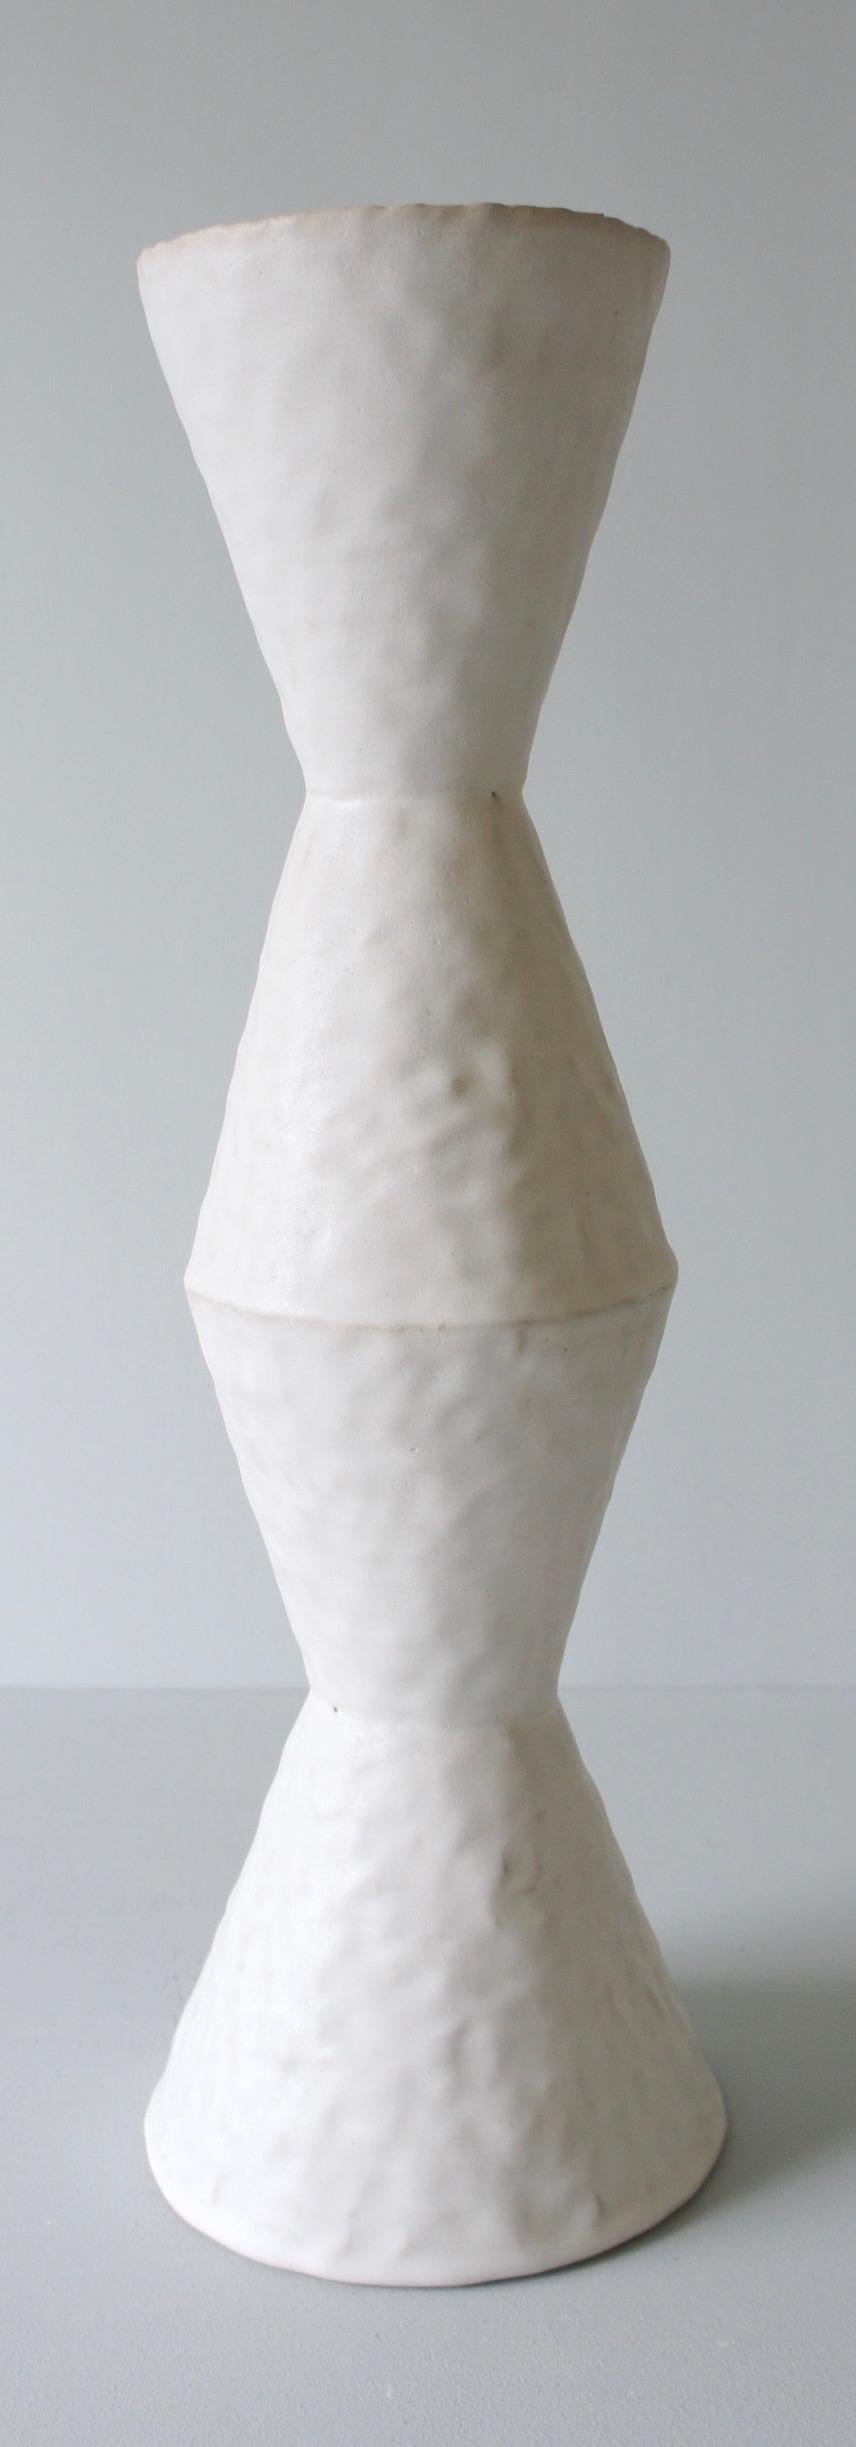 Organique Vase contemporain en céramique blanche de Giselle Hicks, 2019 en vente